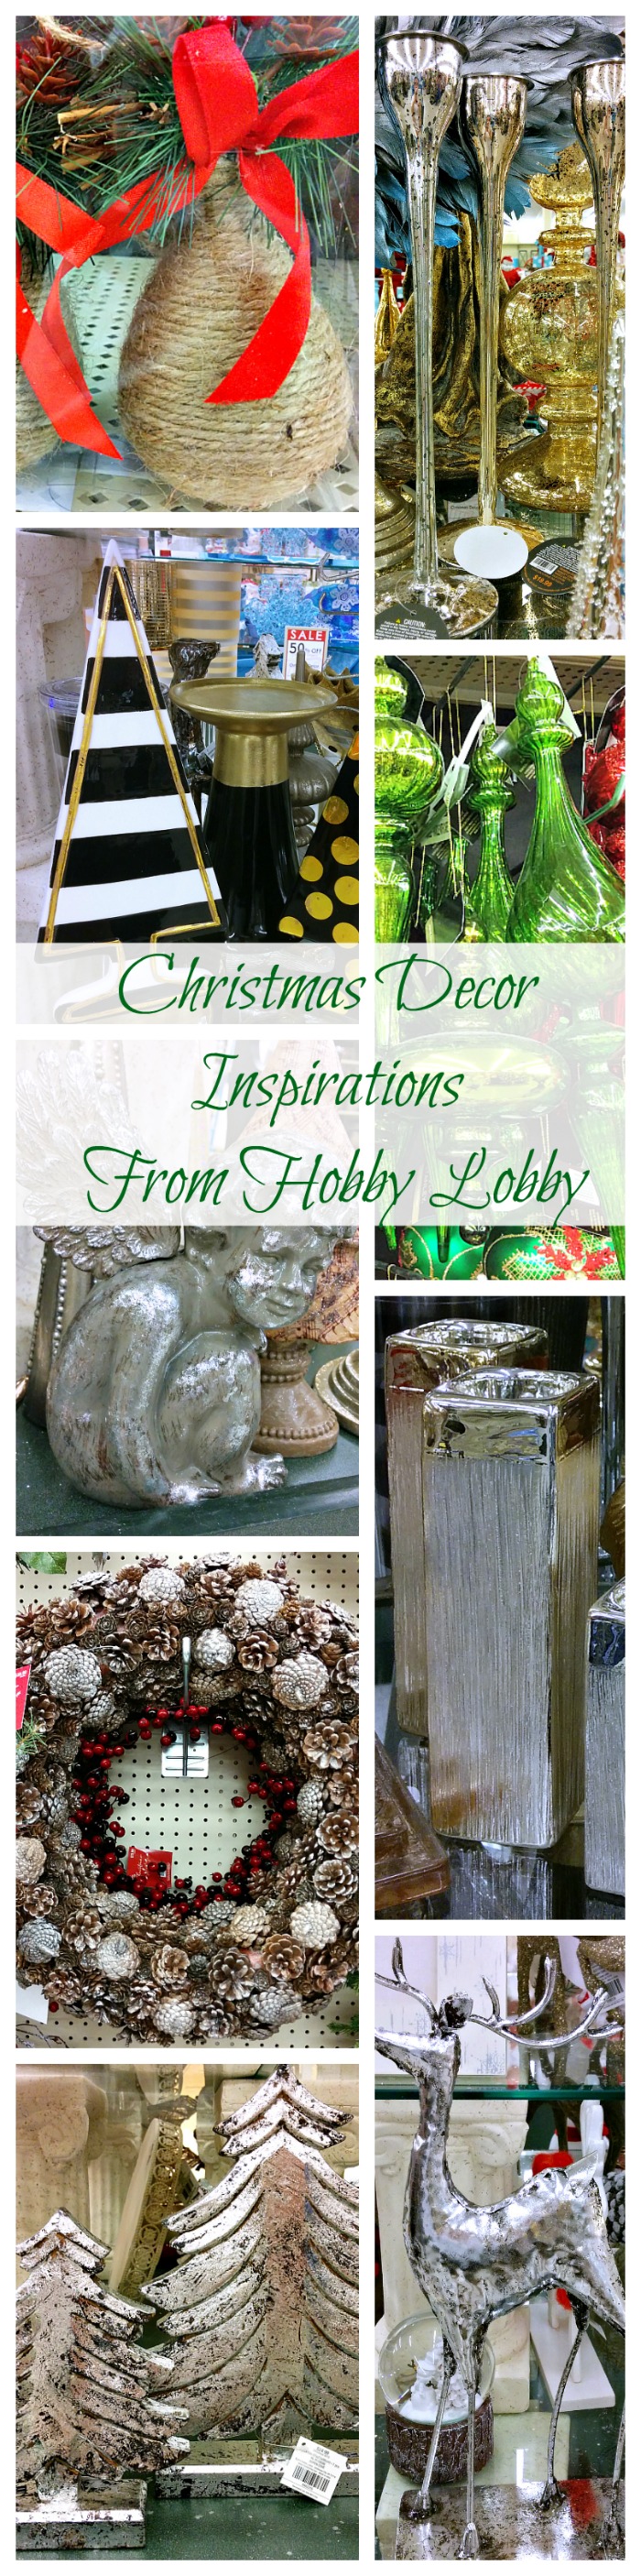 CHRISTMAS DECOR IDEAS & INSPIRATIONS FROM HOBBY LOBBY